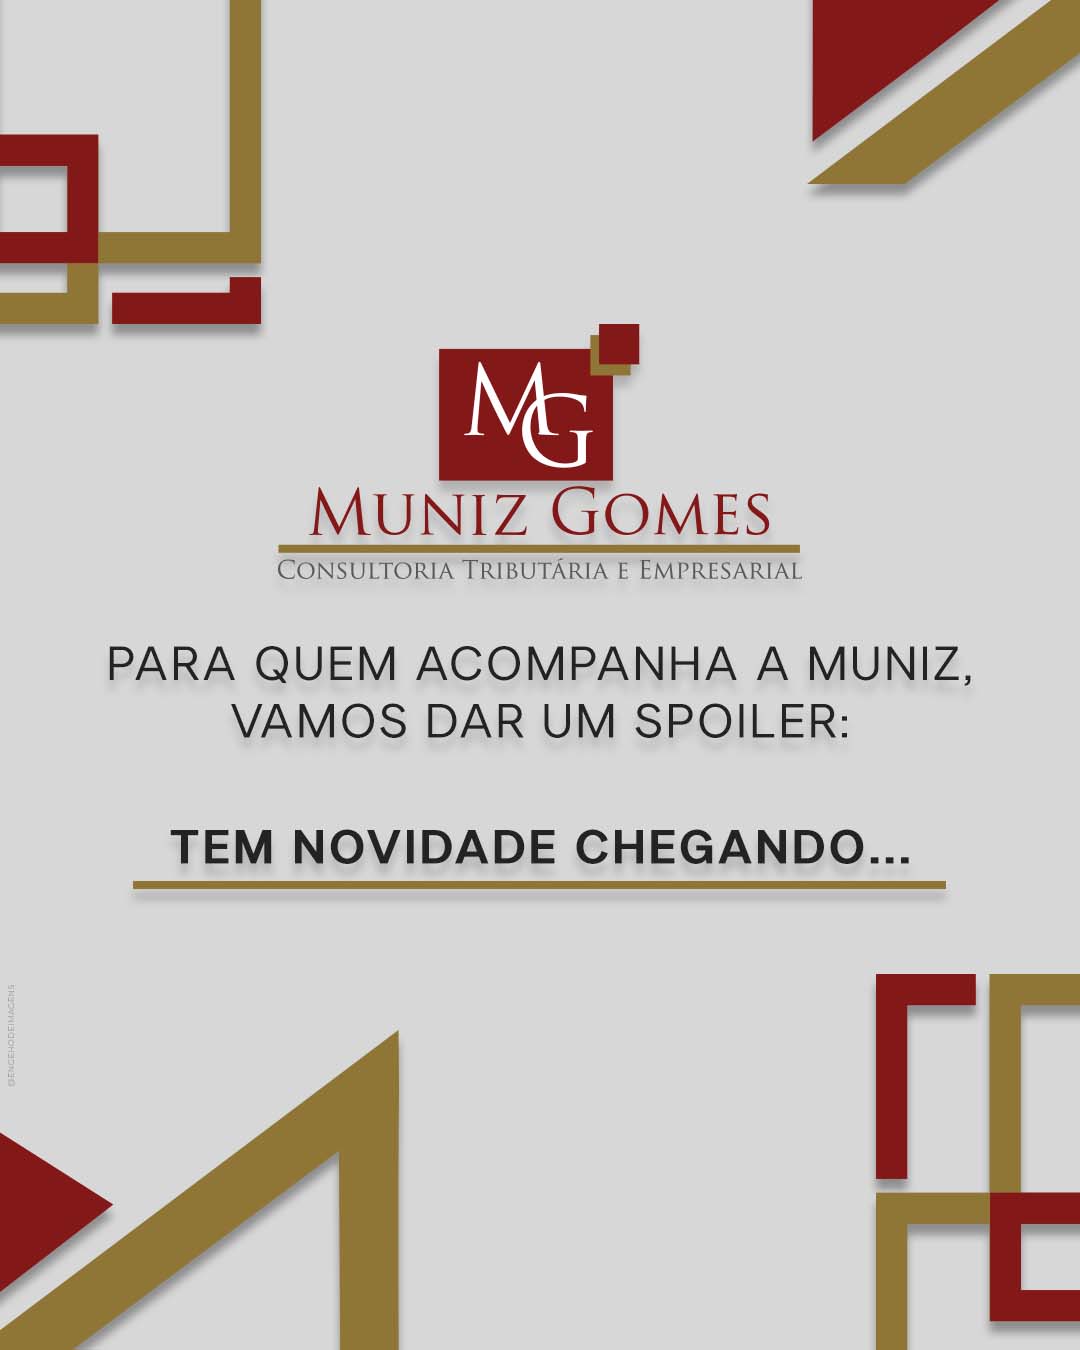 Muniz Gomes